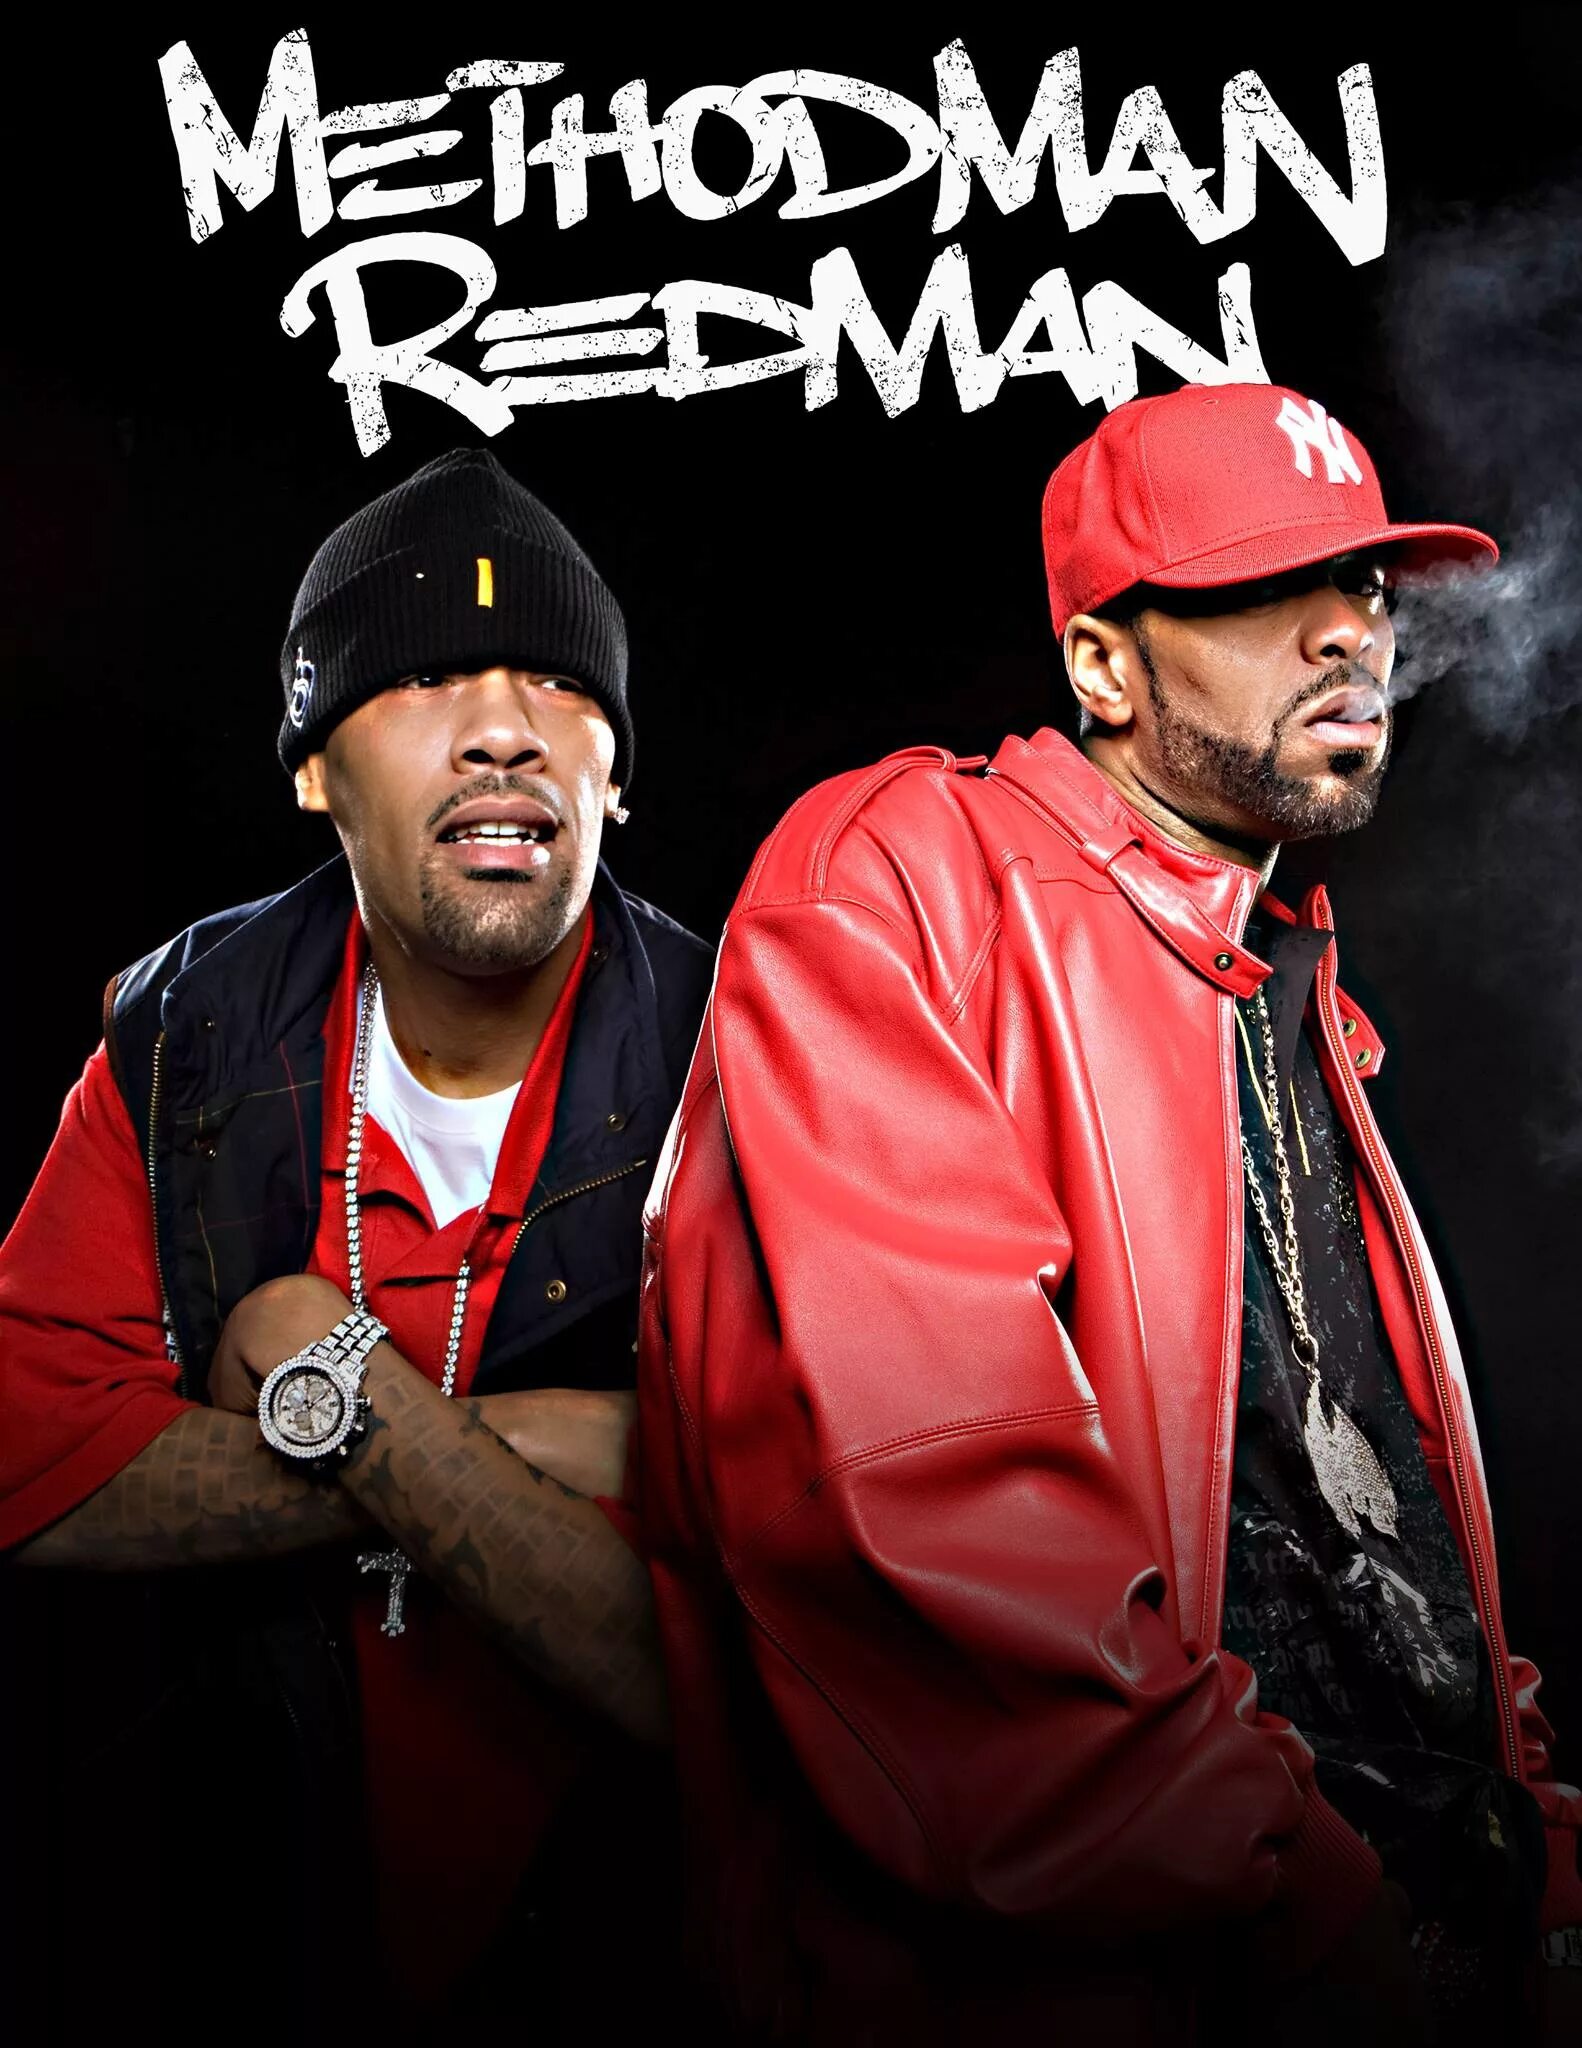 Redman. Method man. Redman фото. Метод ман и Редман. Method man redman